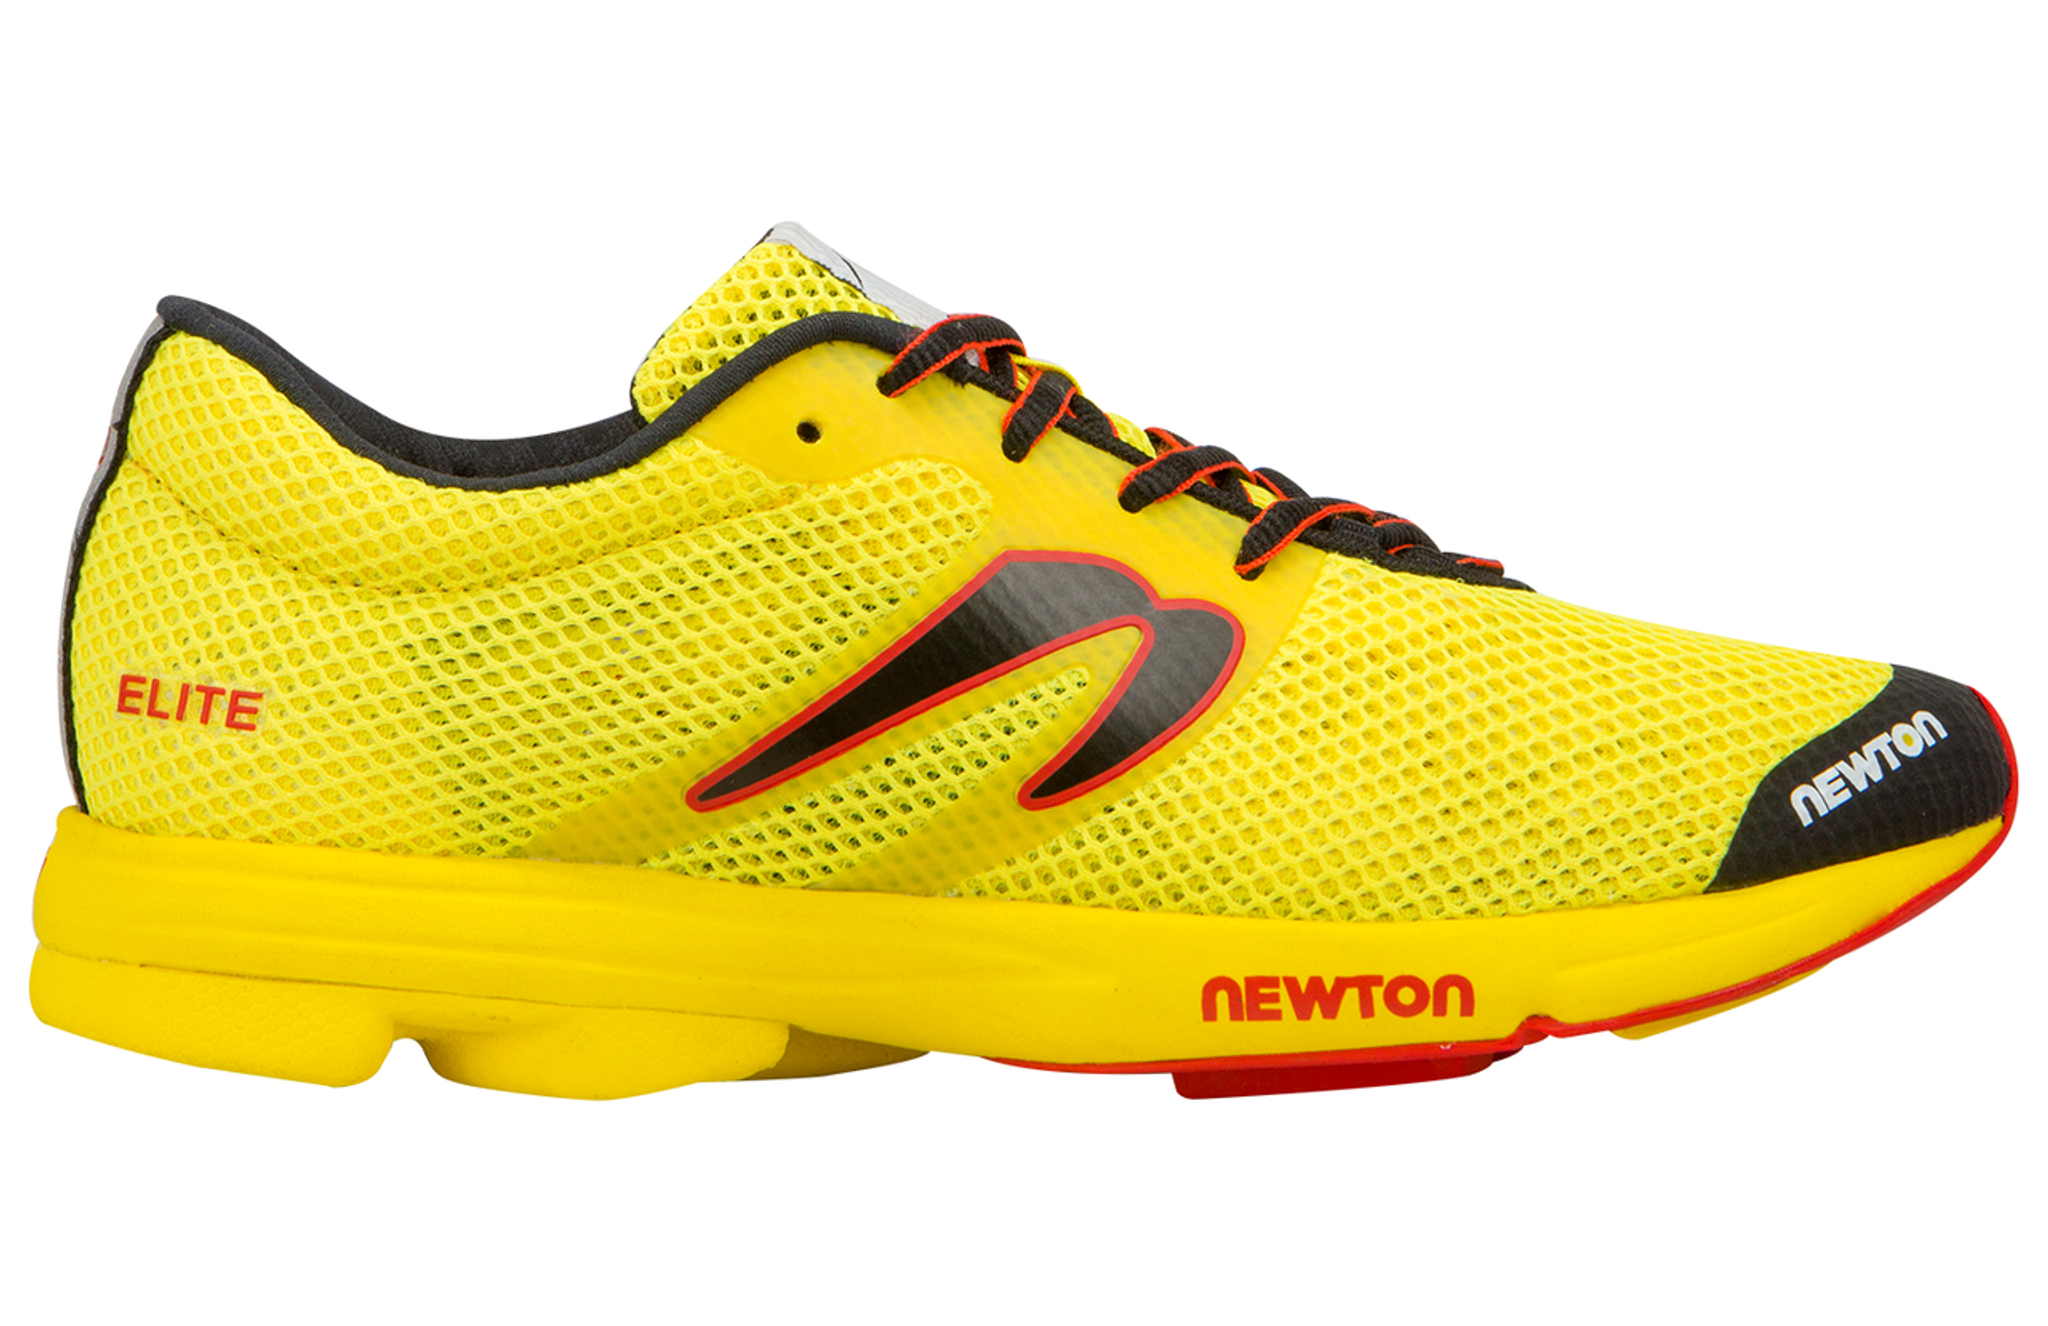 newton elite running shoes